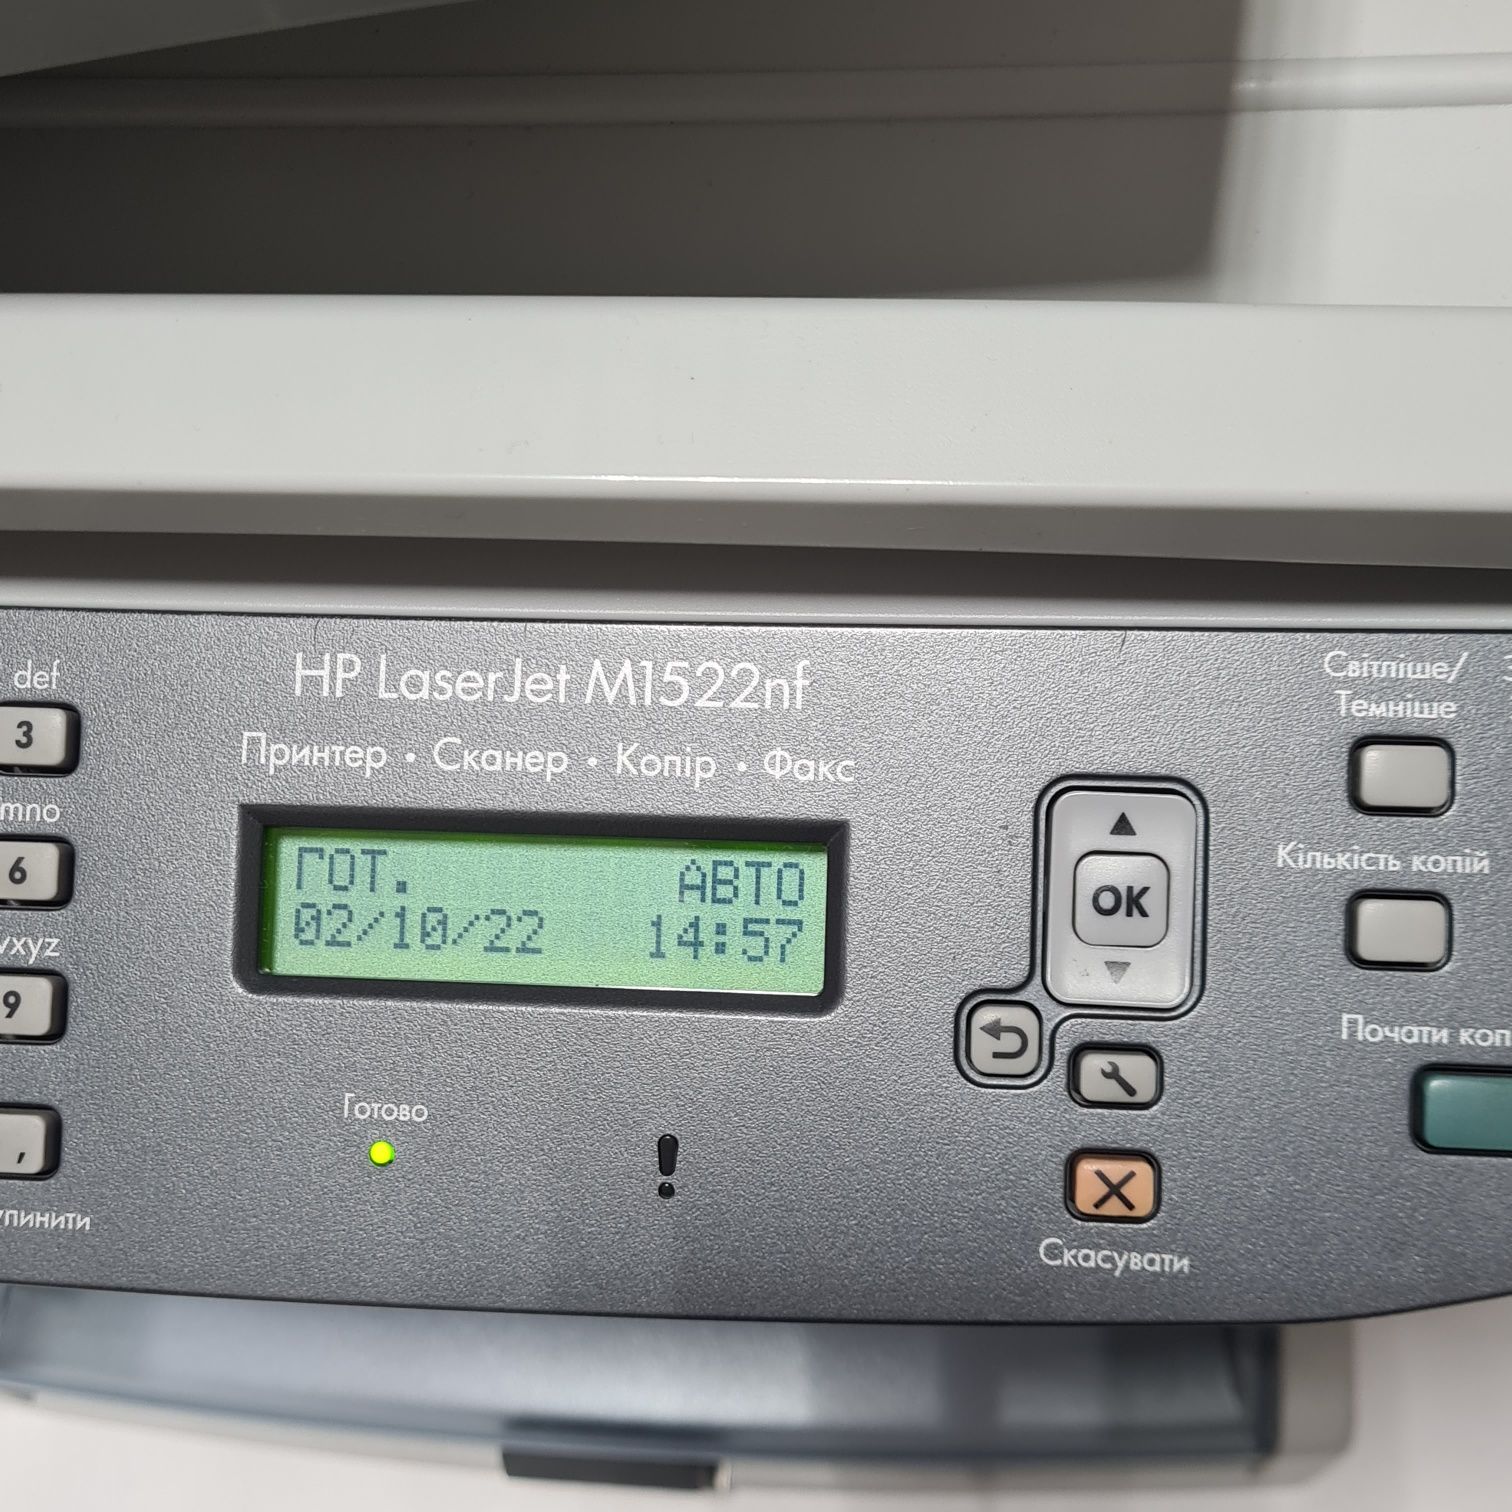 HP LaserJet M1522n. Лазерный принтер сканер копир мфу Гарантия